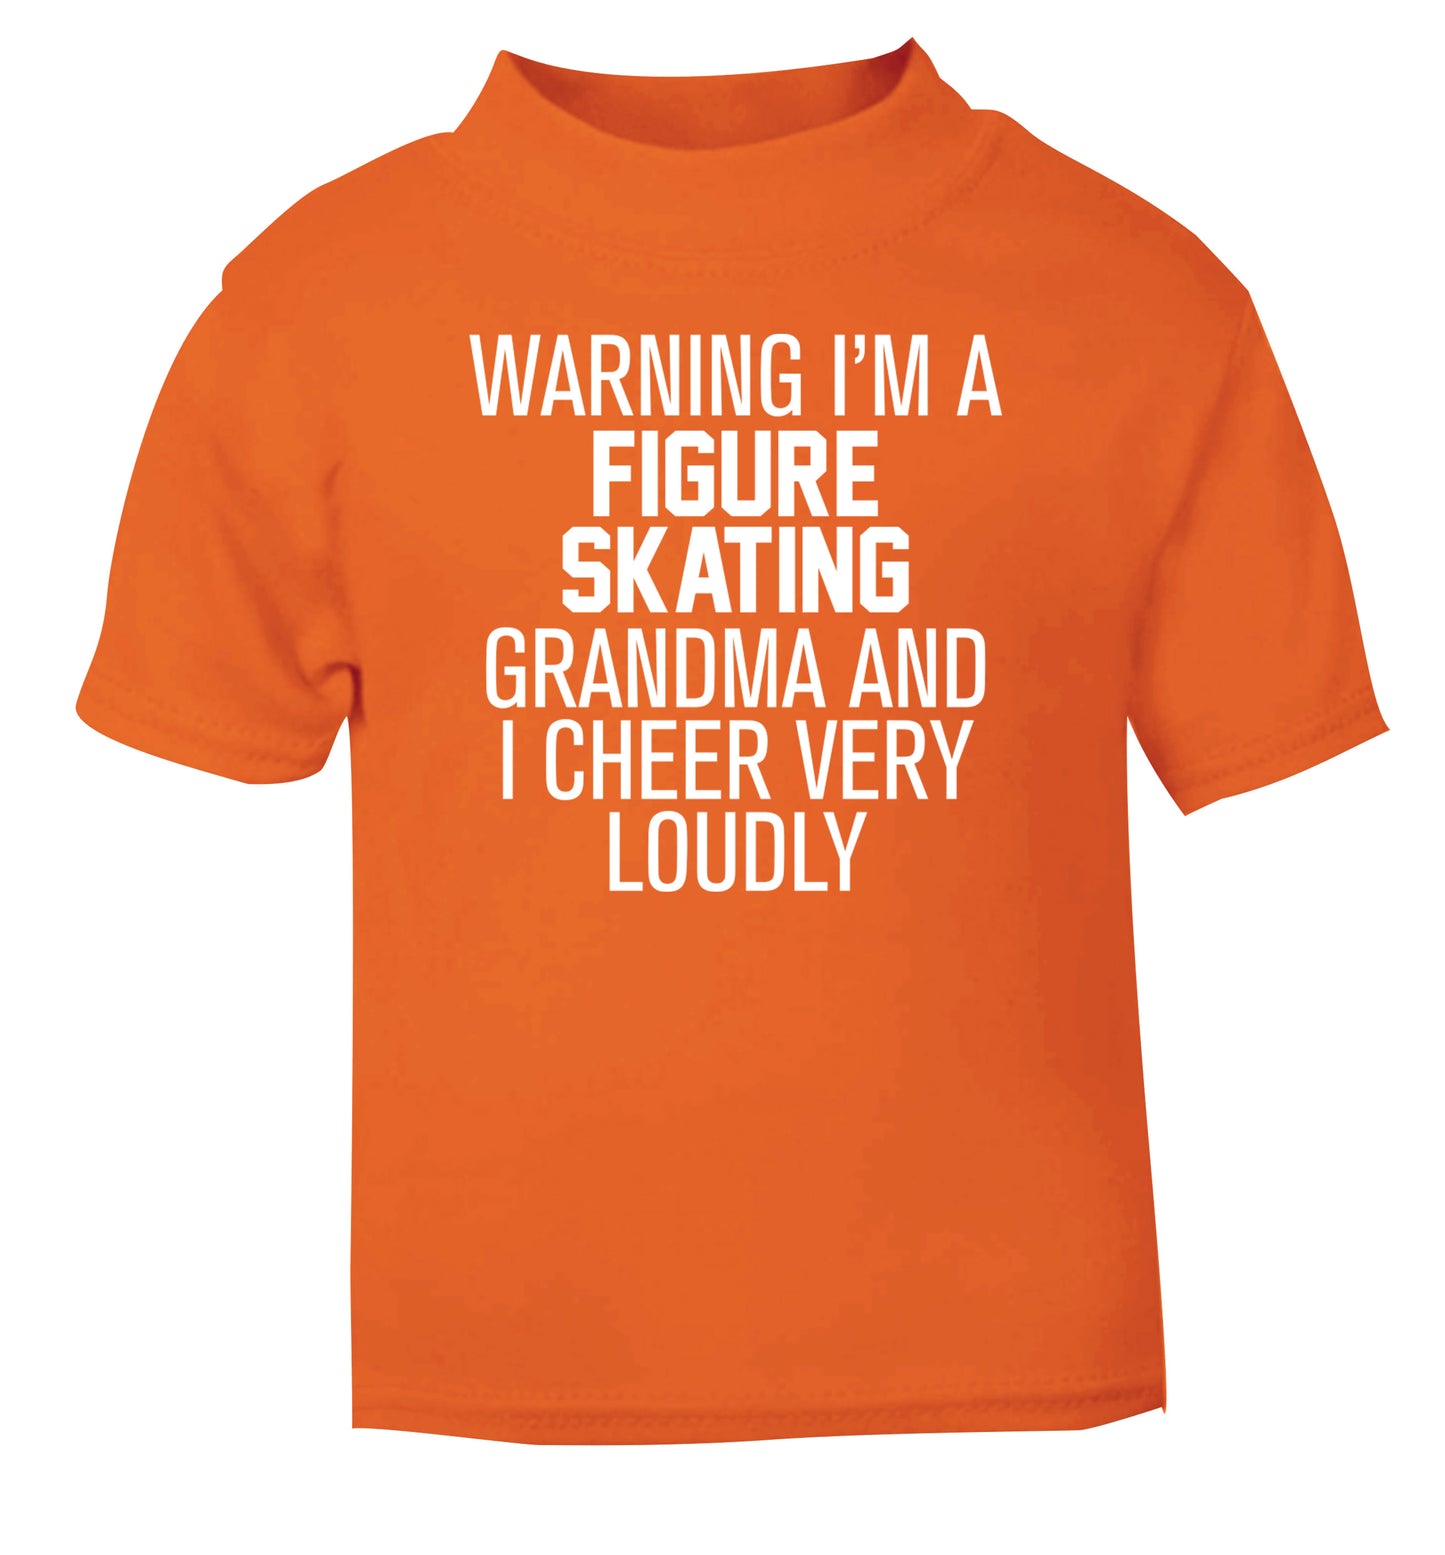 Warning I'm a figure skating grandma and I cheer very loudly orange Baby Toddler Tshirt 2 Years